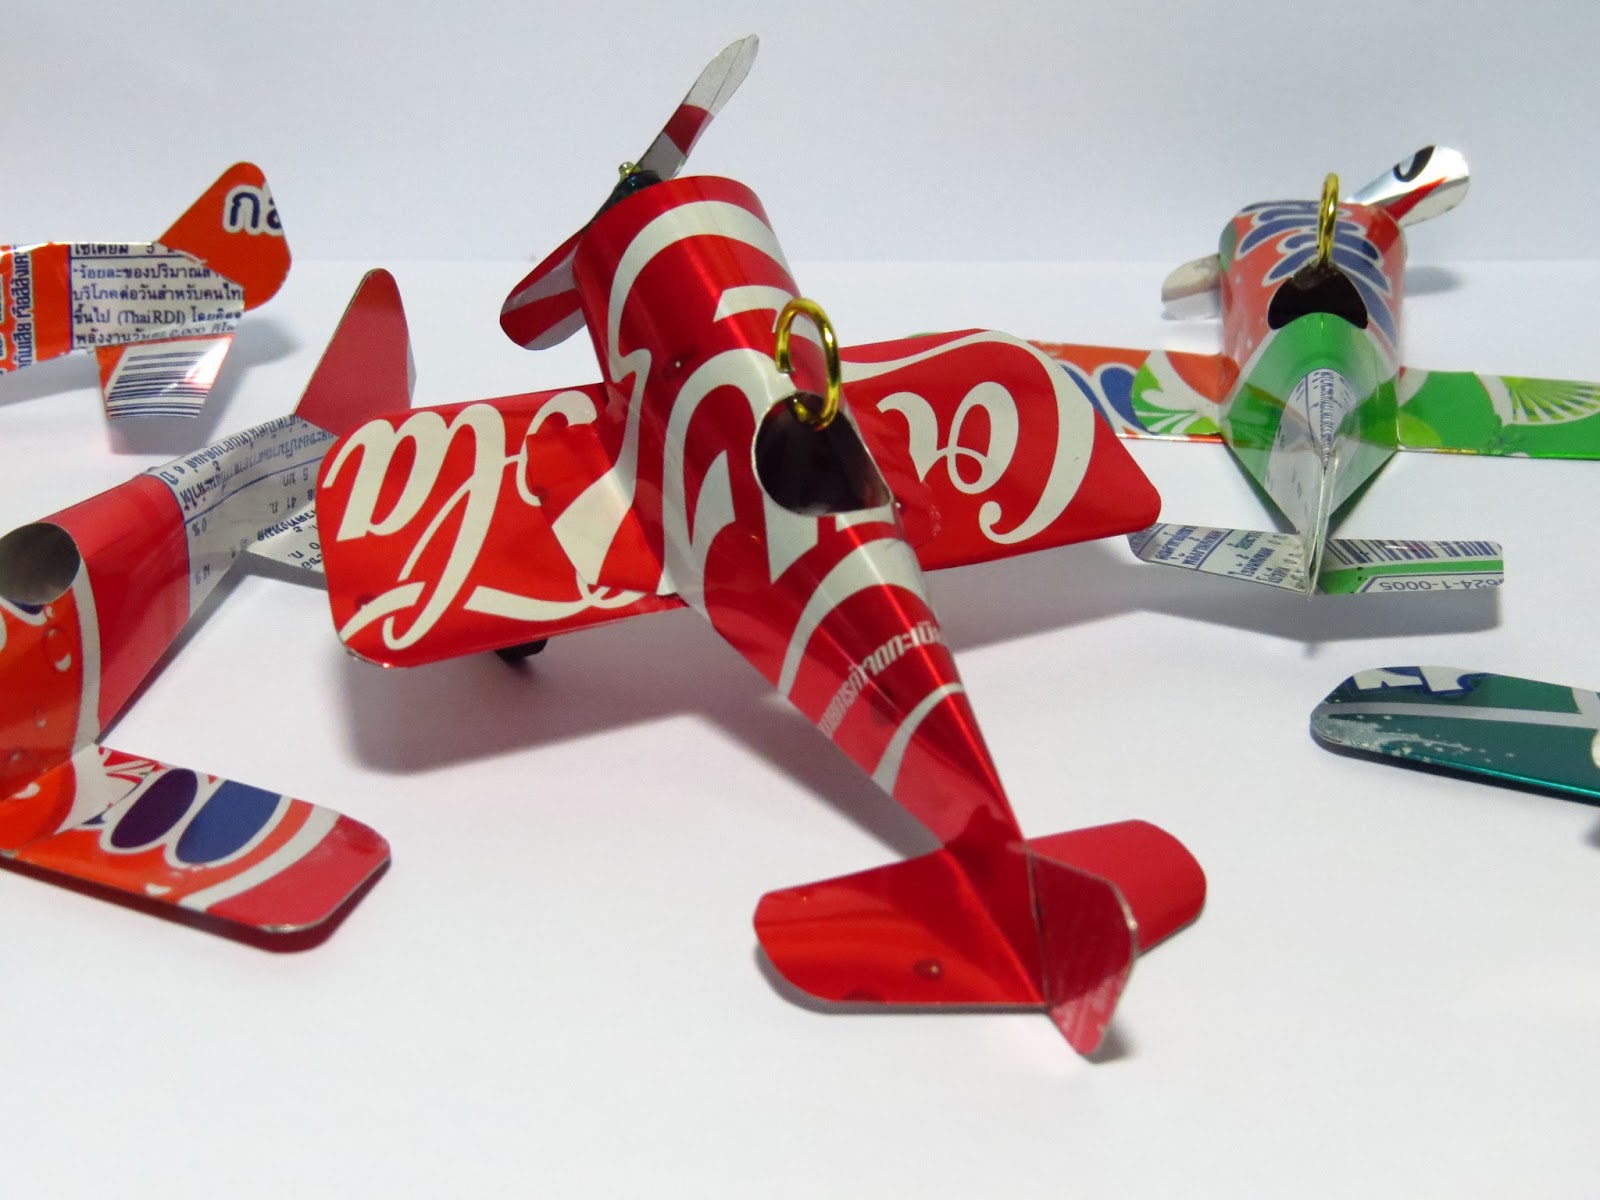 Jcwings: ทำเครื่องบินจากกระป๋องน้ำอัดลม Make Soda Can Airplane.